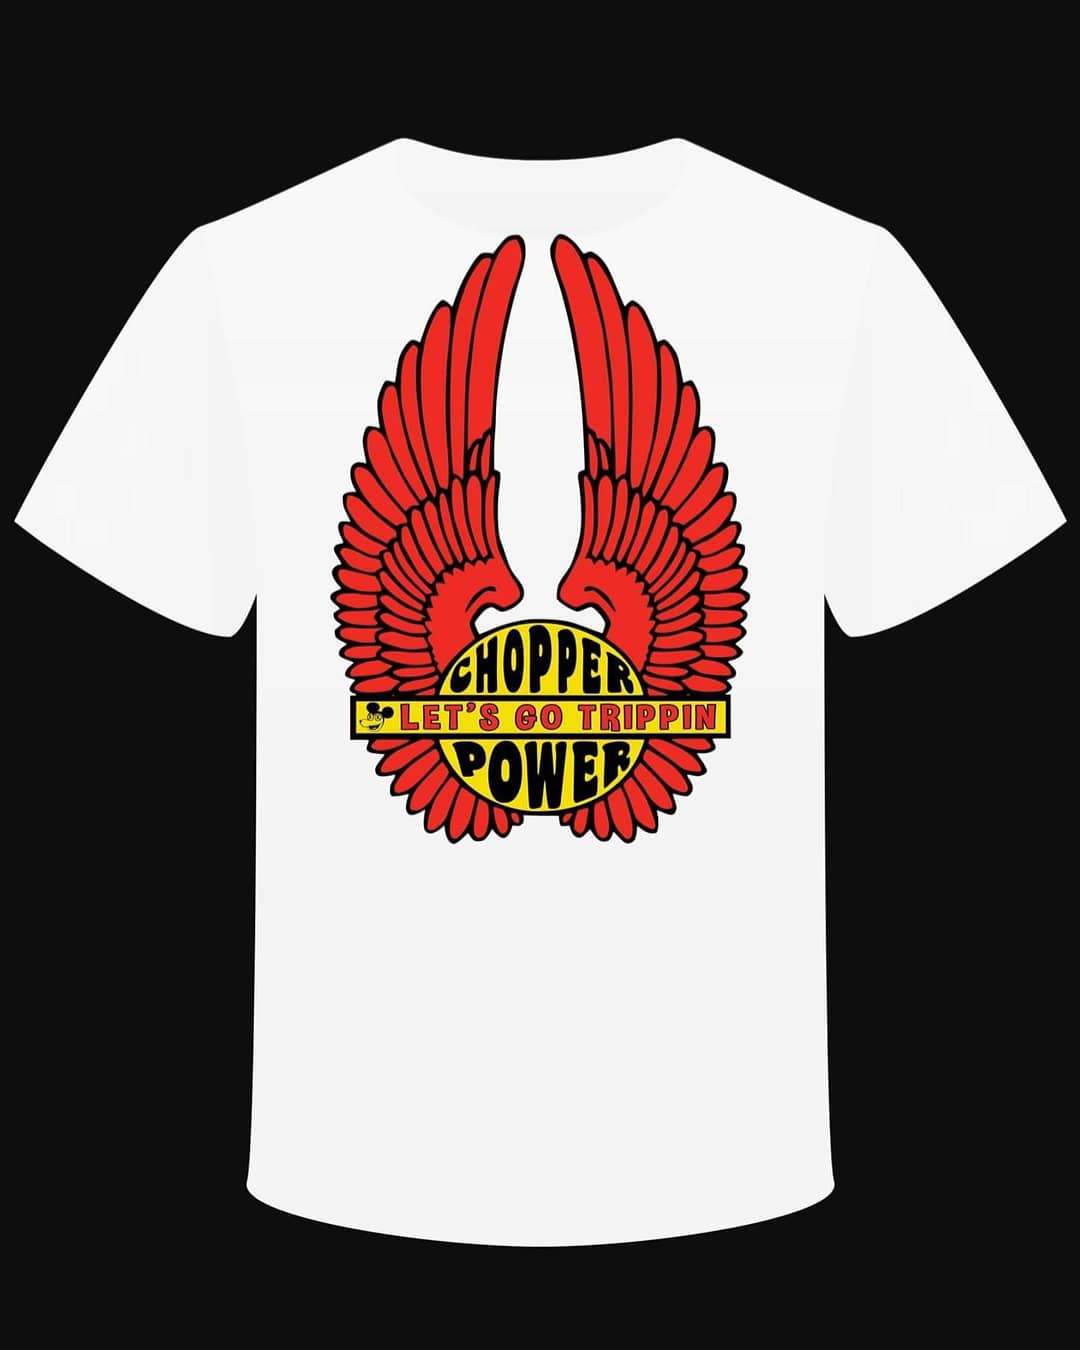 T-shirt "Chopper Power Let's go trippin"